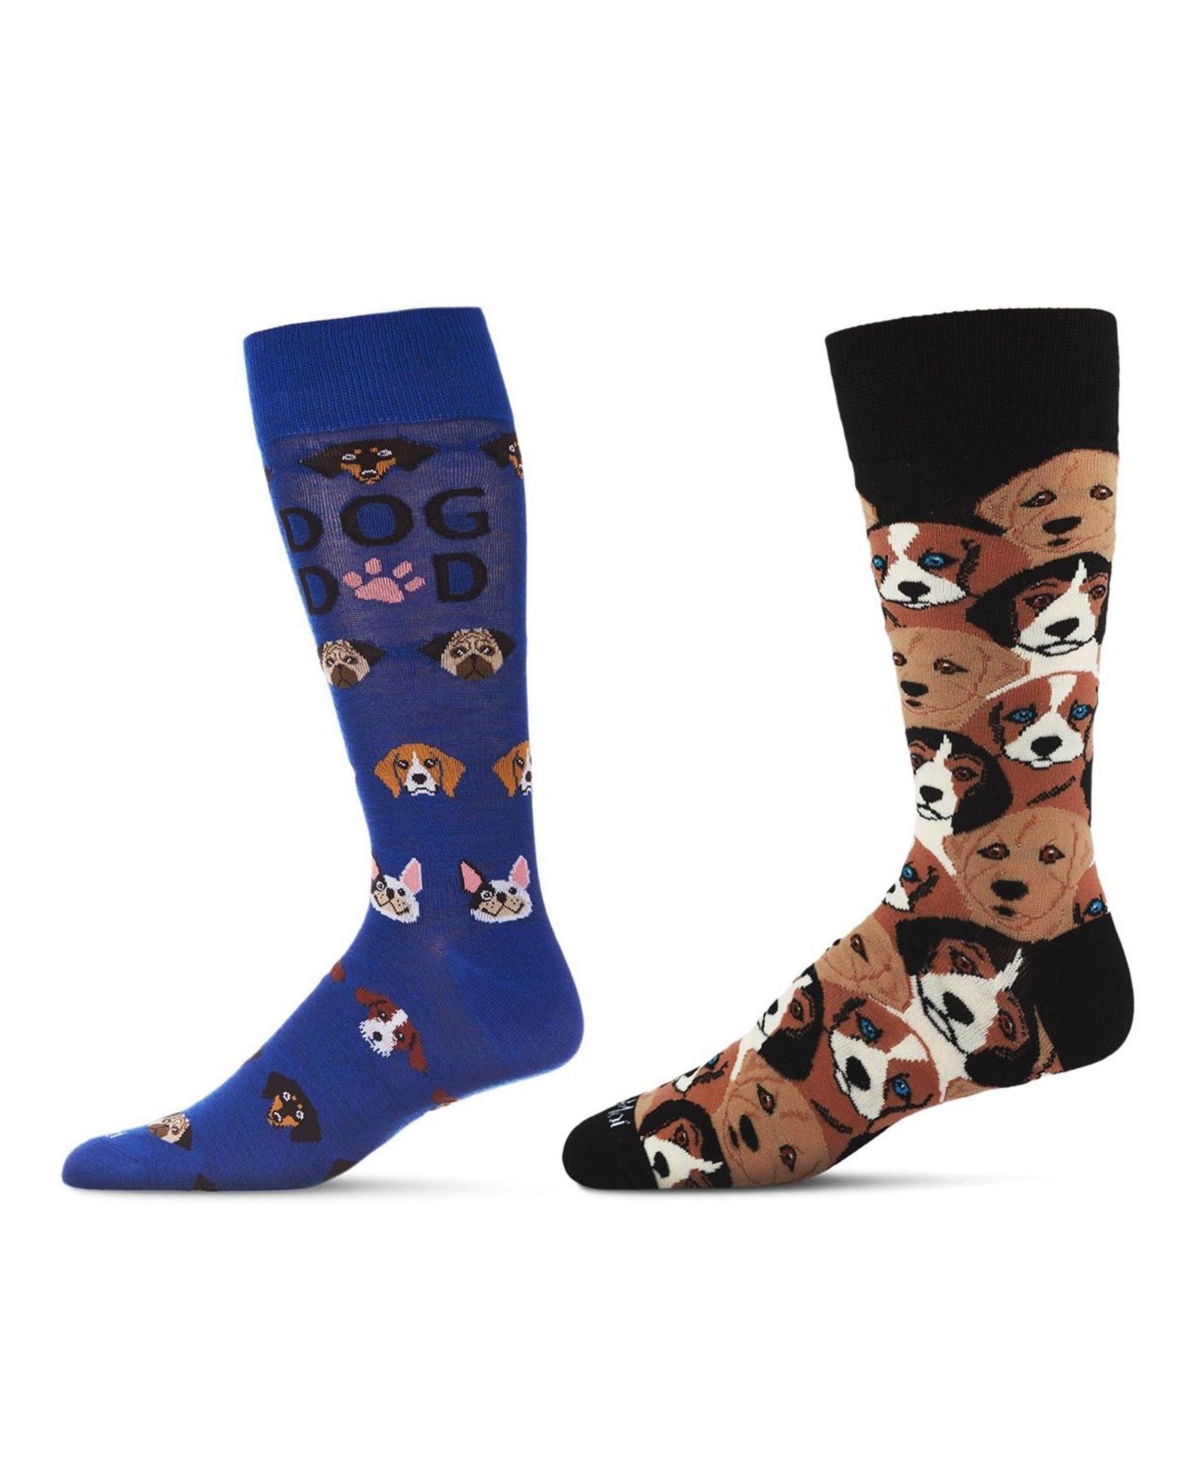 Men's Crew Animal Assortment Socks, Pair of 2 - Black-Blue